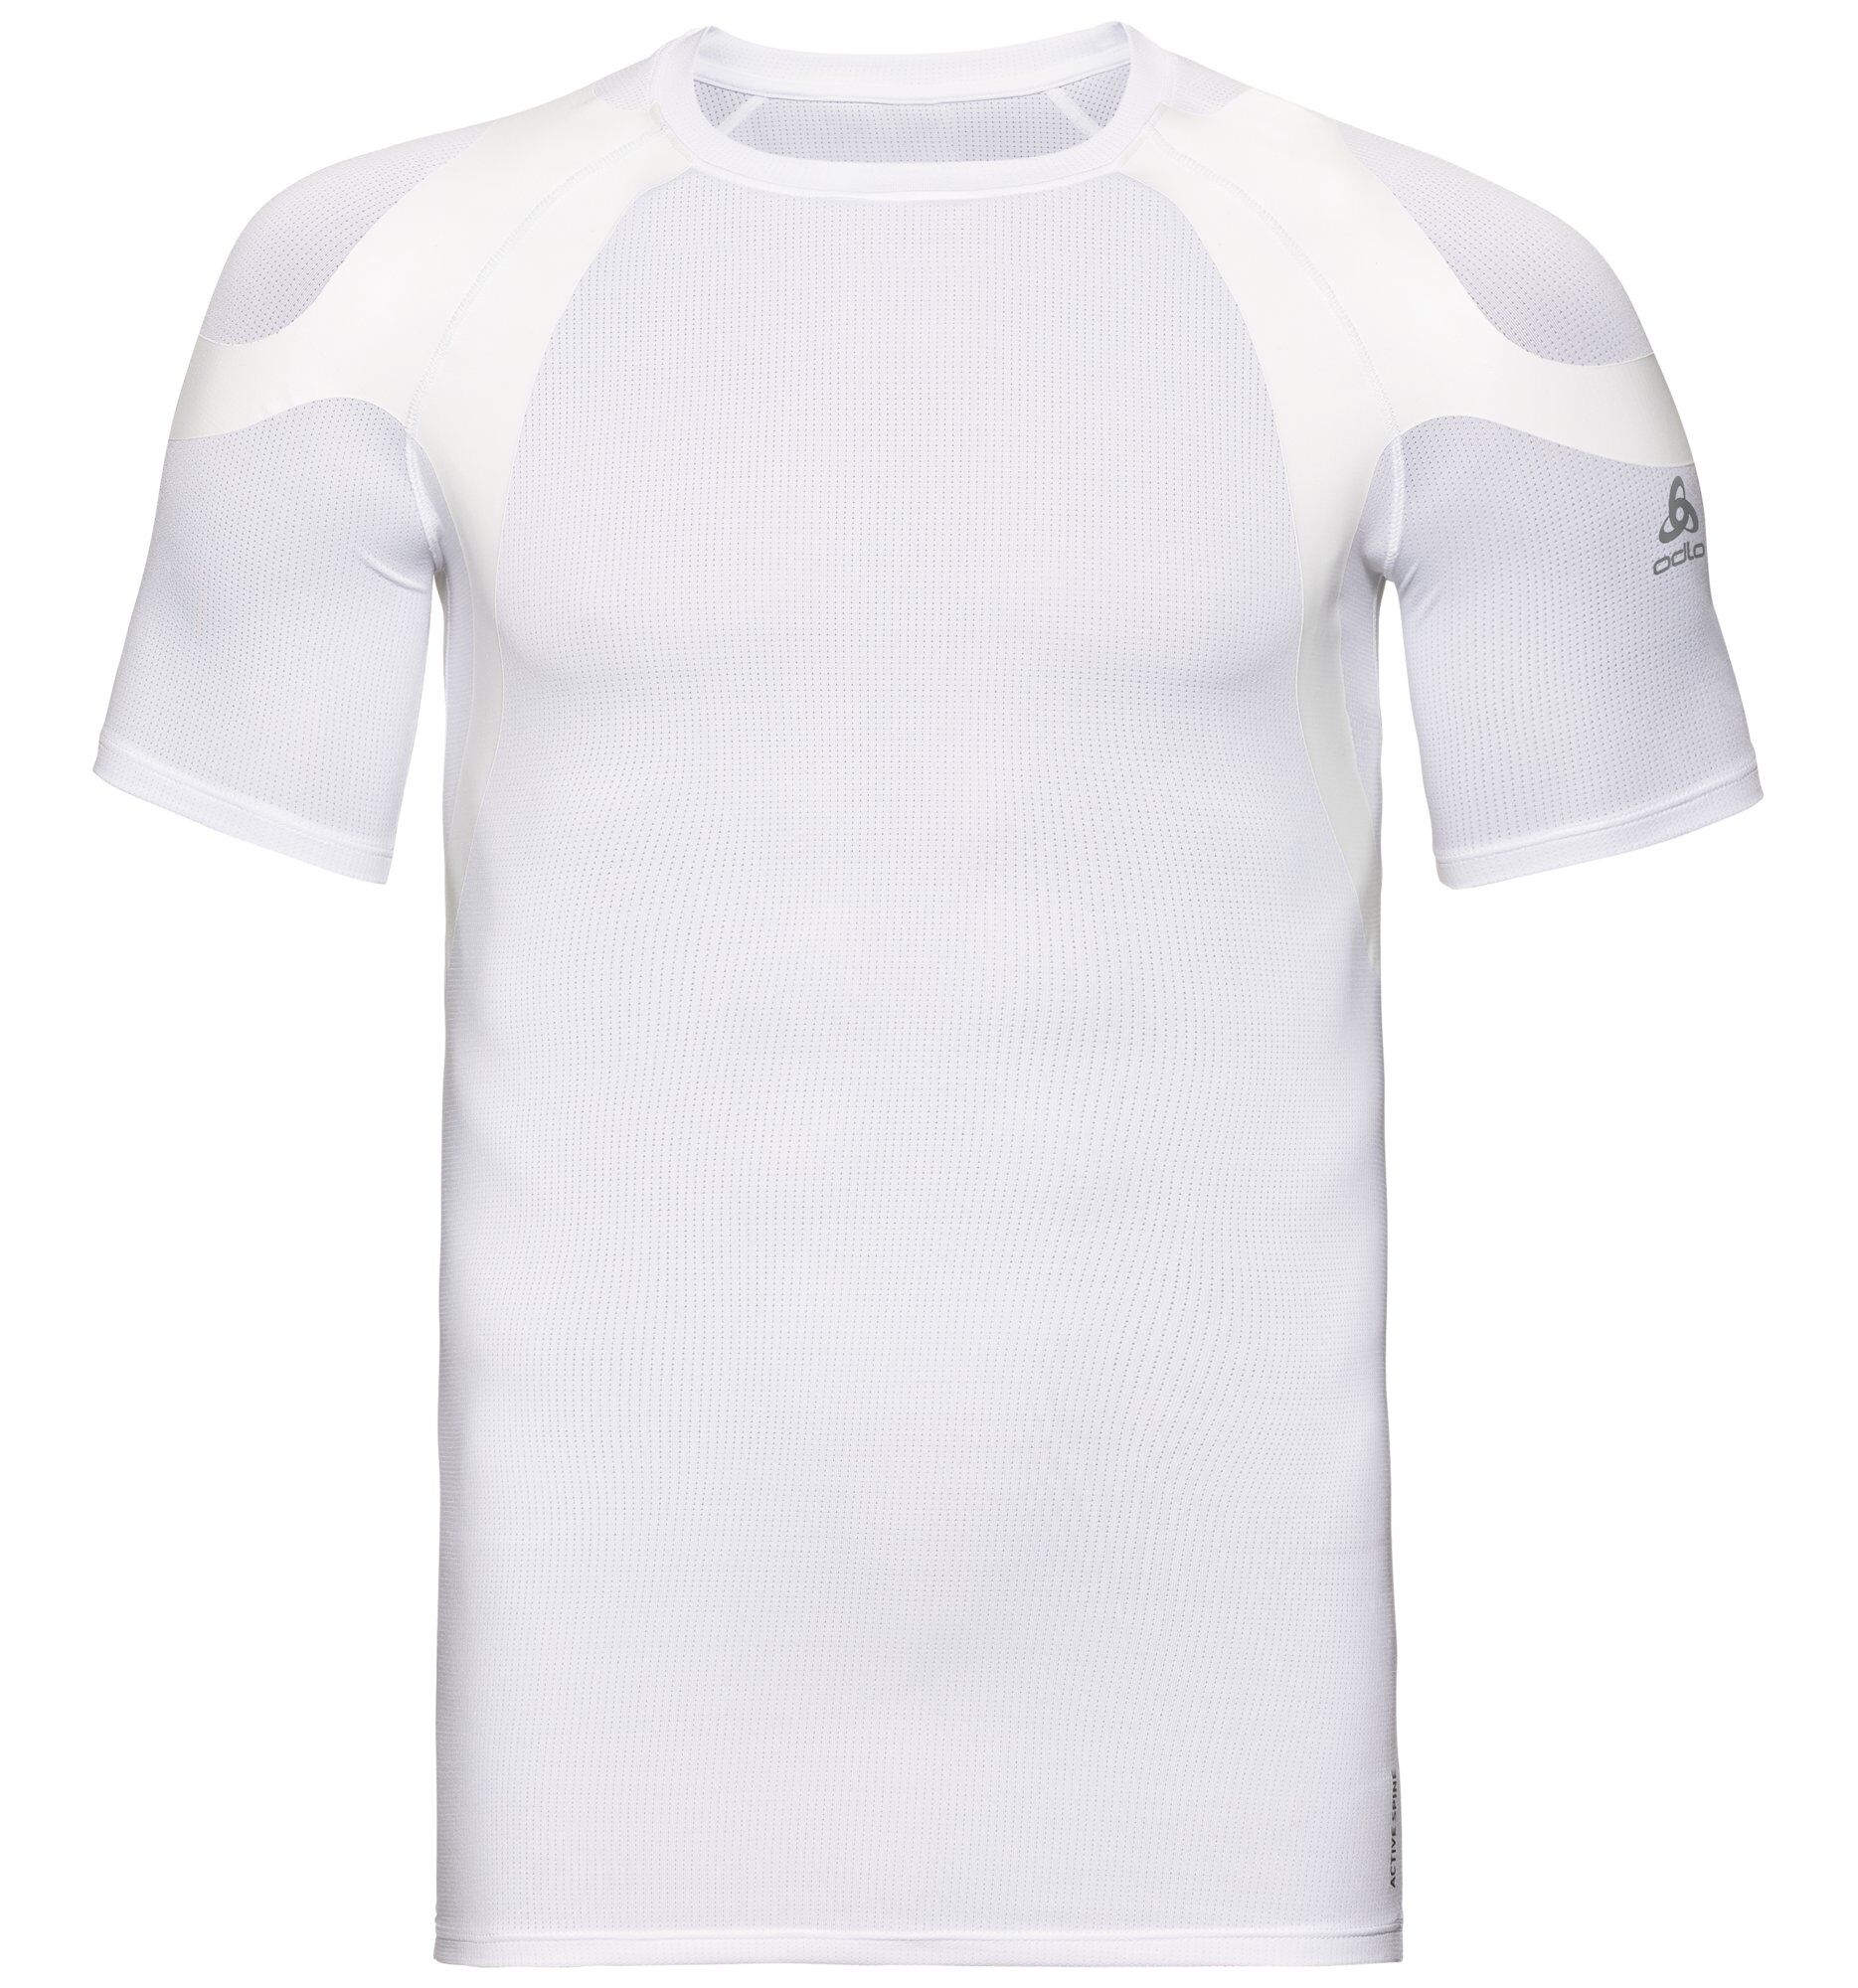 Odlo Active Spine Light - T-shirt - Men's